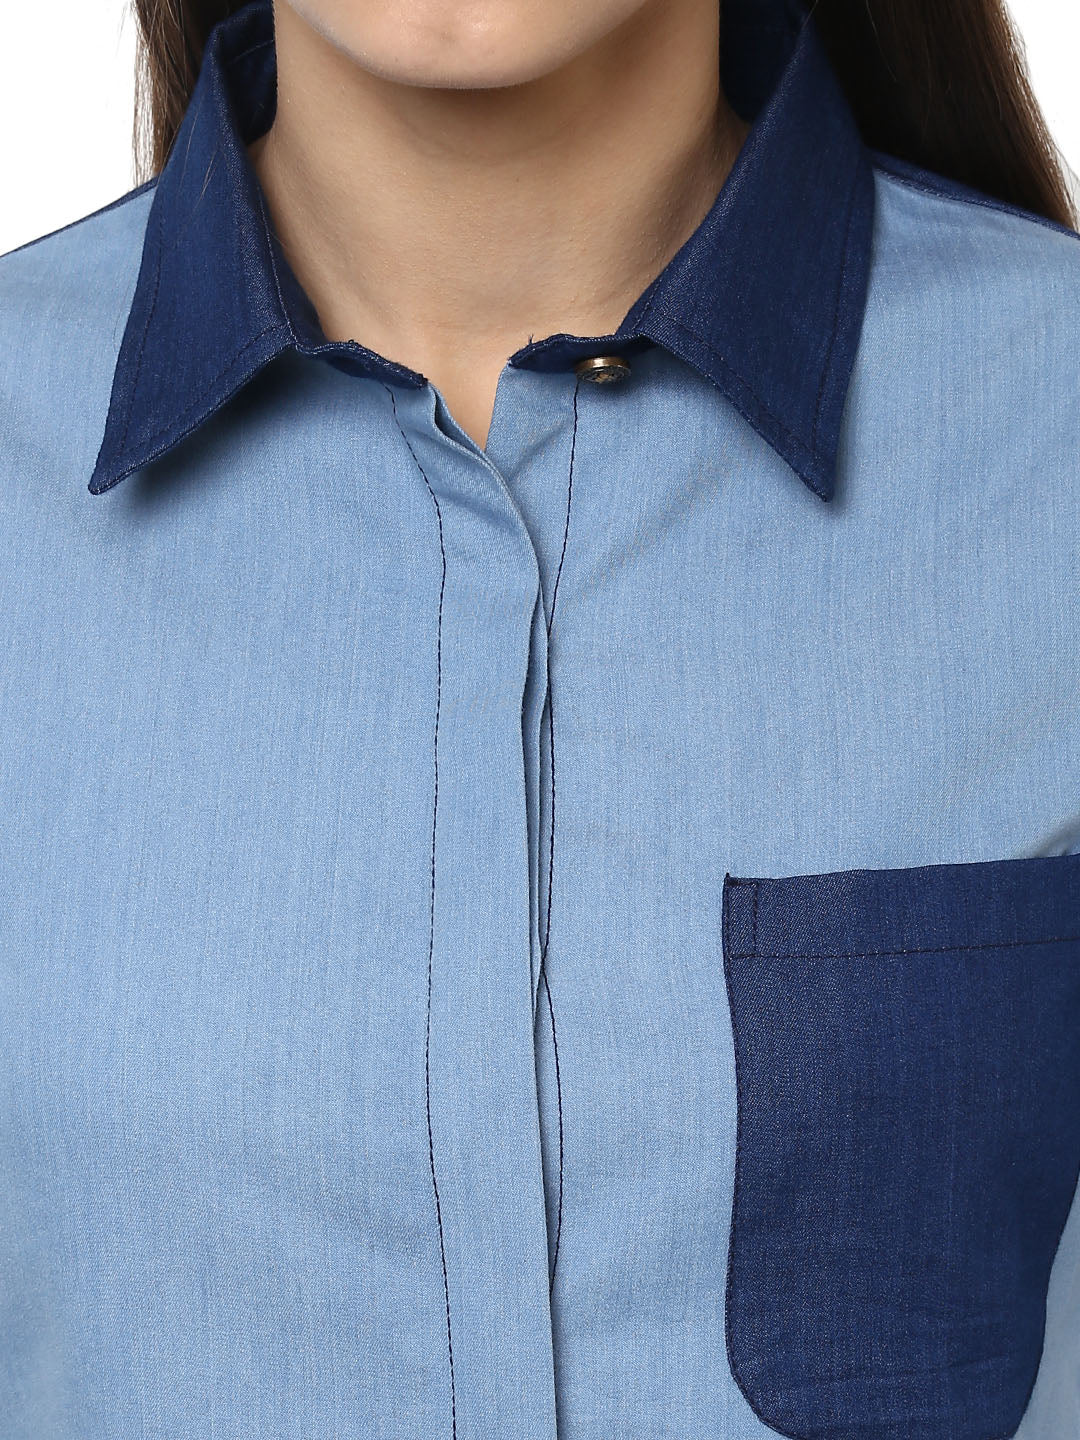 Women's Denim Light and Dark Blue Patch Shirt - StyleStone